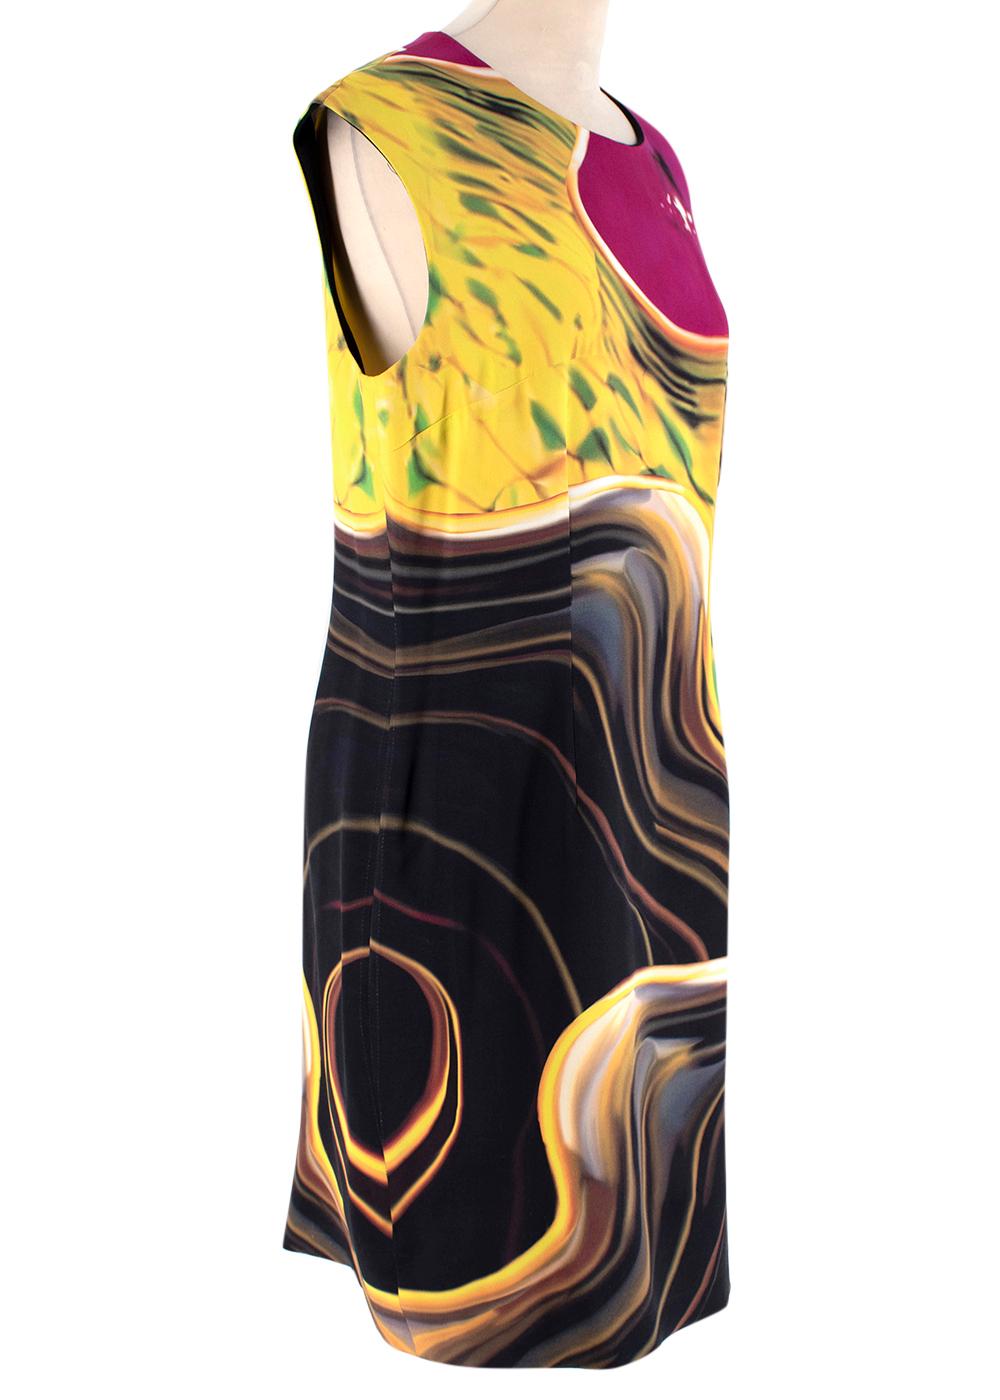 Mary Katrantzou Multi-coloured Swirl Pattern Shift Dress

- Shift style 
- Multi-coloured swirl pattern 
- Lined 
- Round neck 
- Sleeveless 
- Invisible back zip fastening 

Materials:
Main fabric:
- 100% Silk 
Lining:
- 100% Cupro Bemberg 

Dry